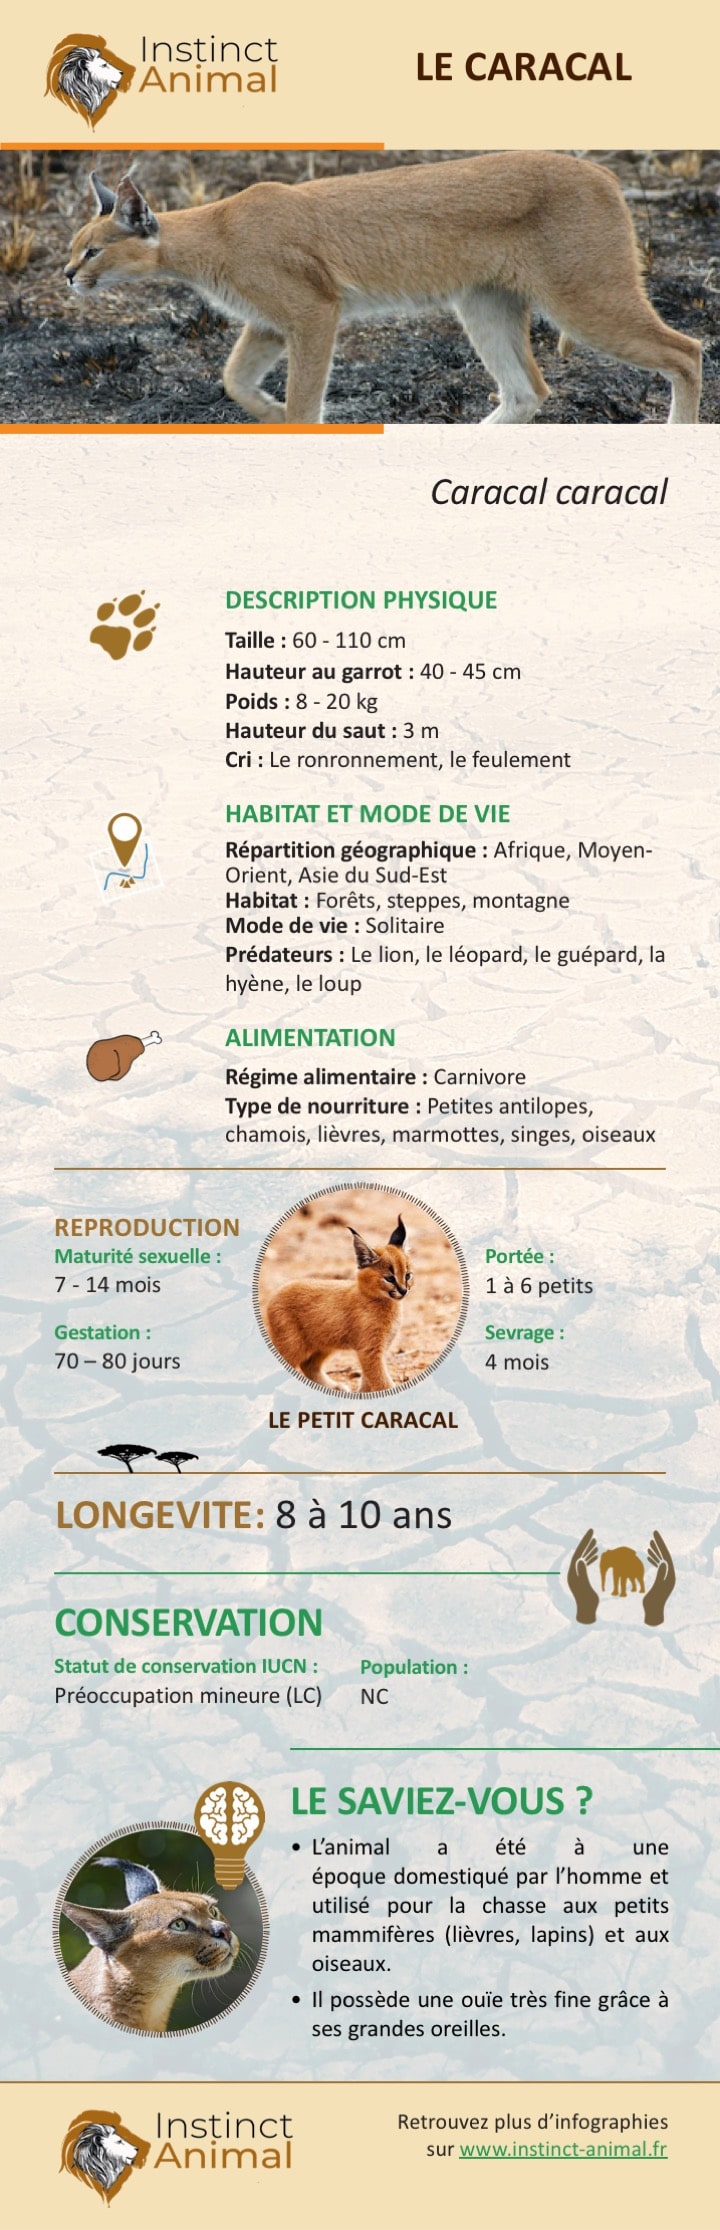 Le caracal - Infographie du félin - Instinct Animal